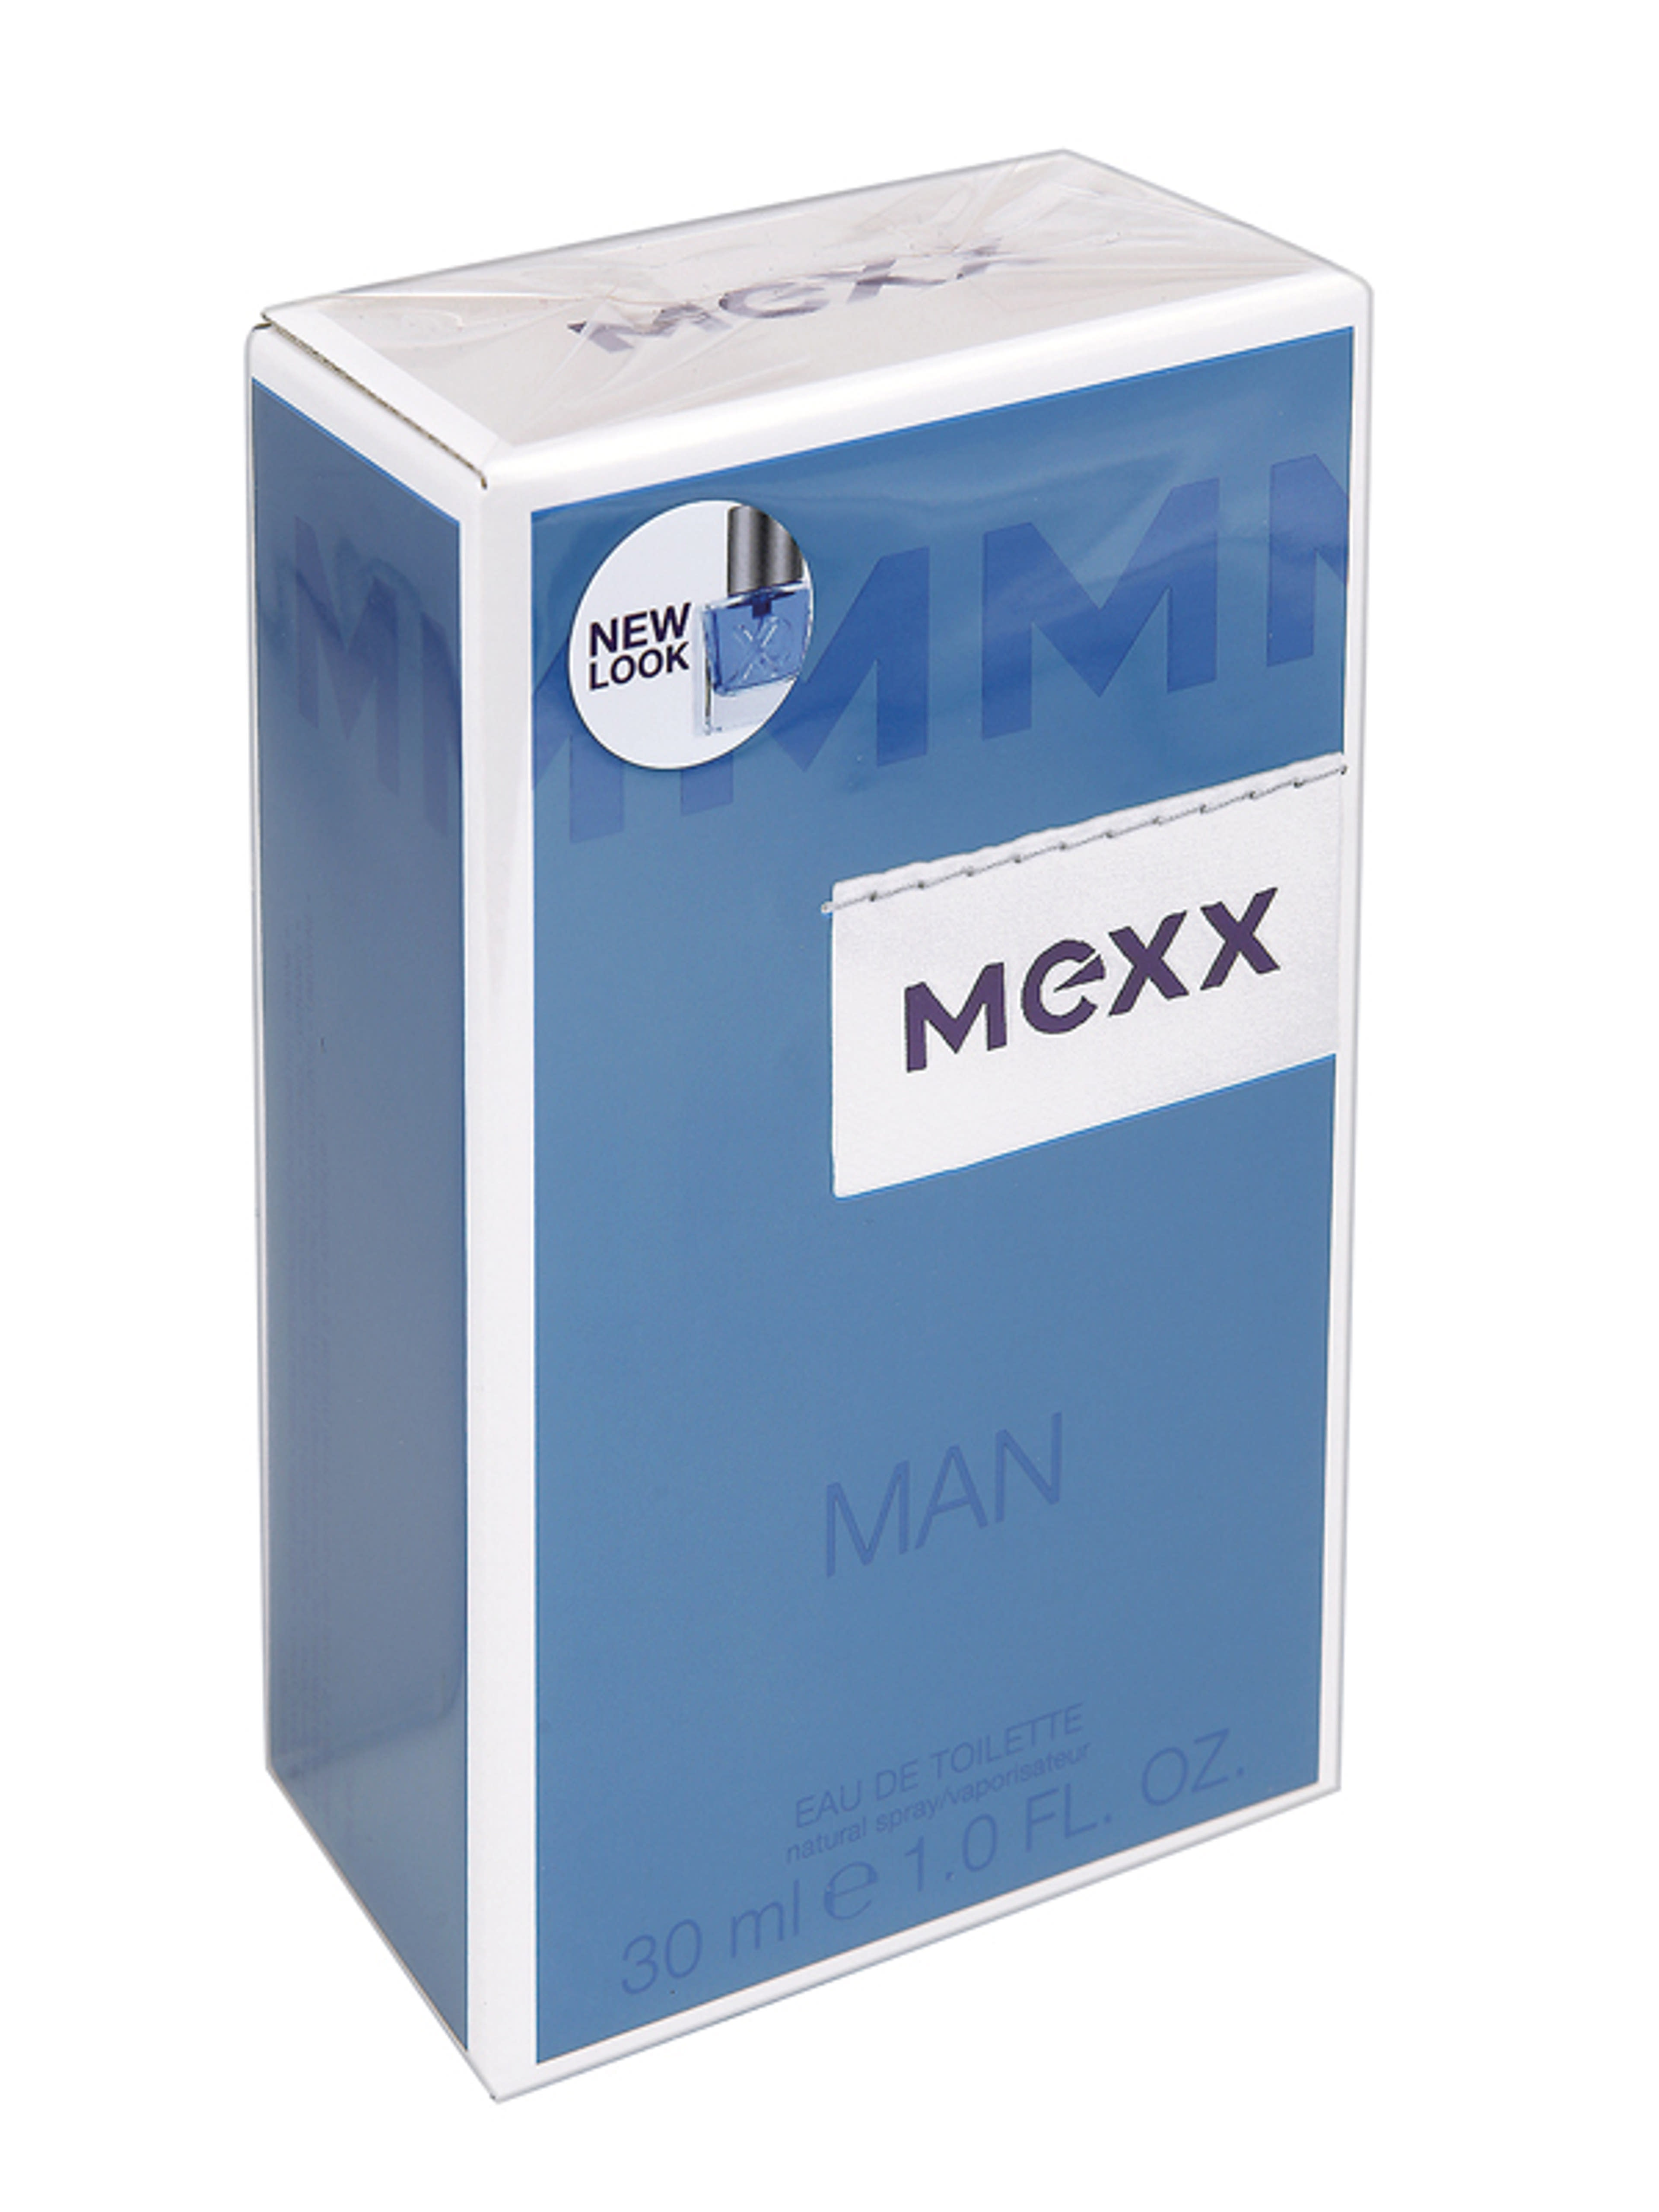 Mexx Man férfi Eau de Toilette - 30 ml-1